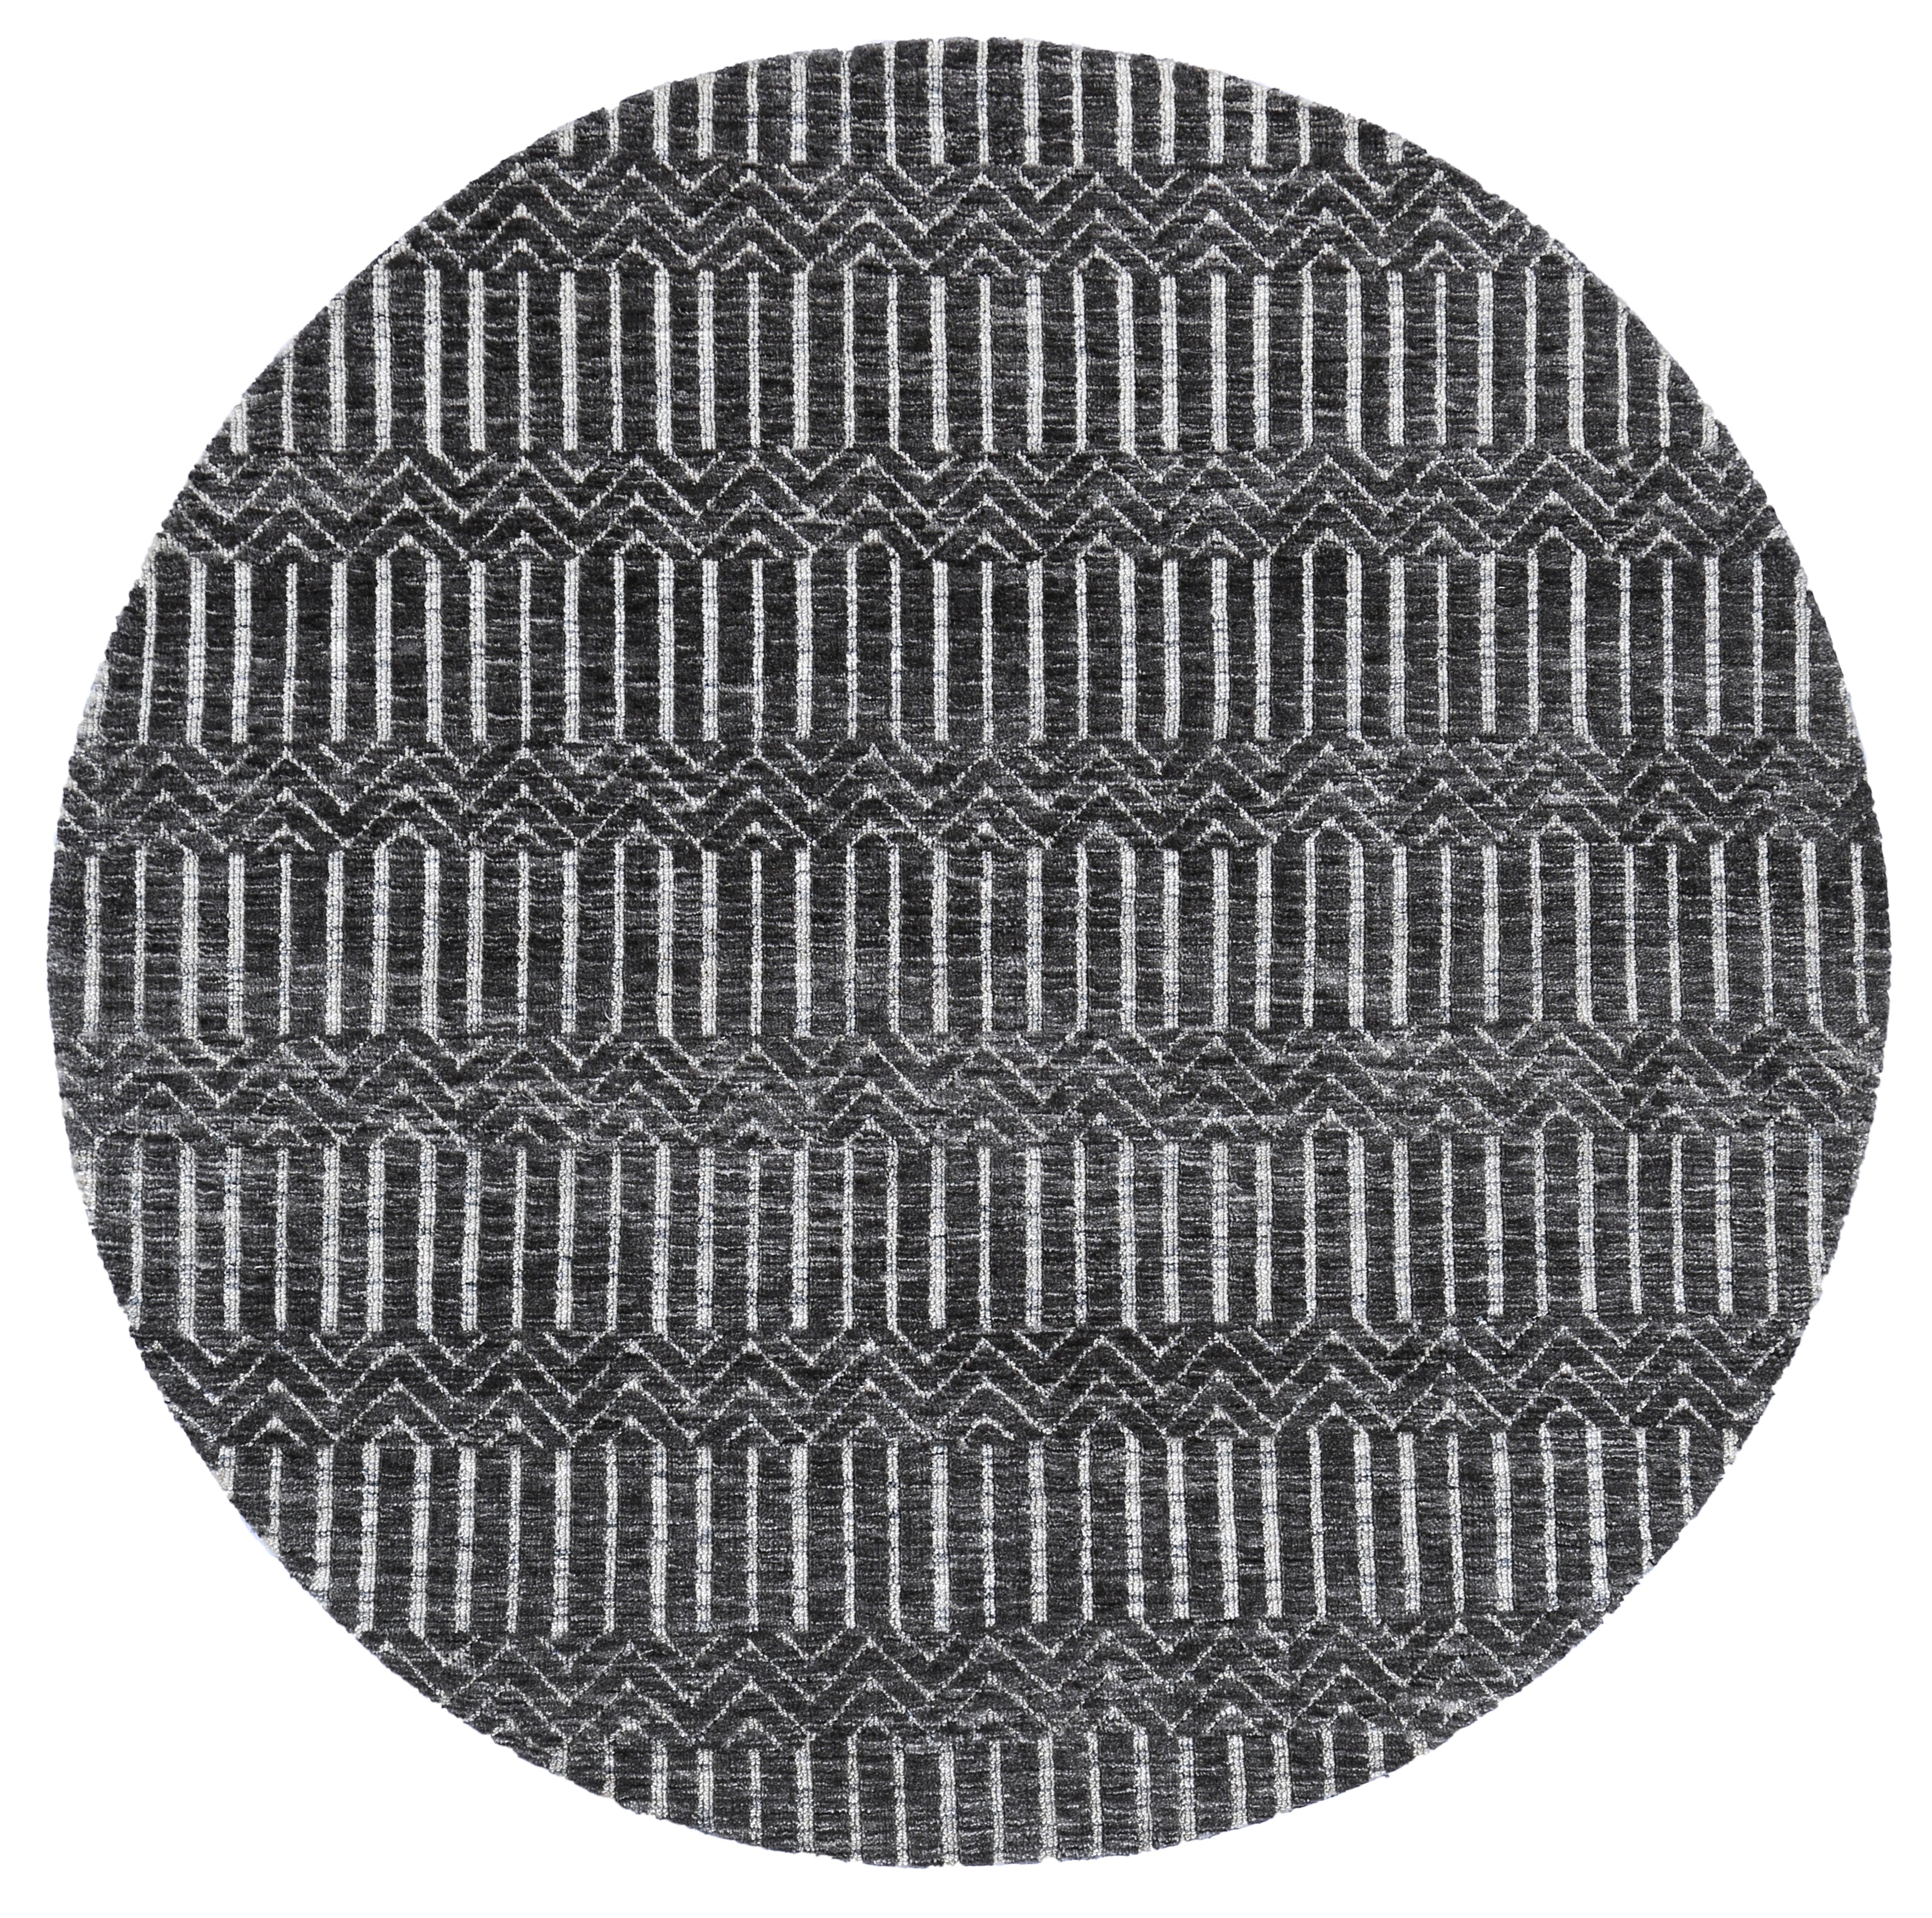 Ambarsar Attari Blend In Black & White : Round Rug